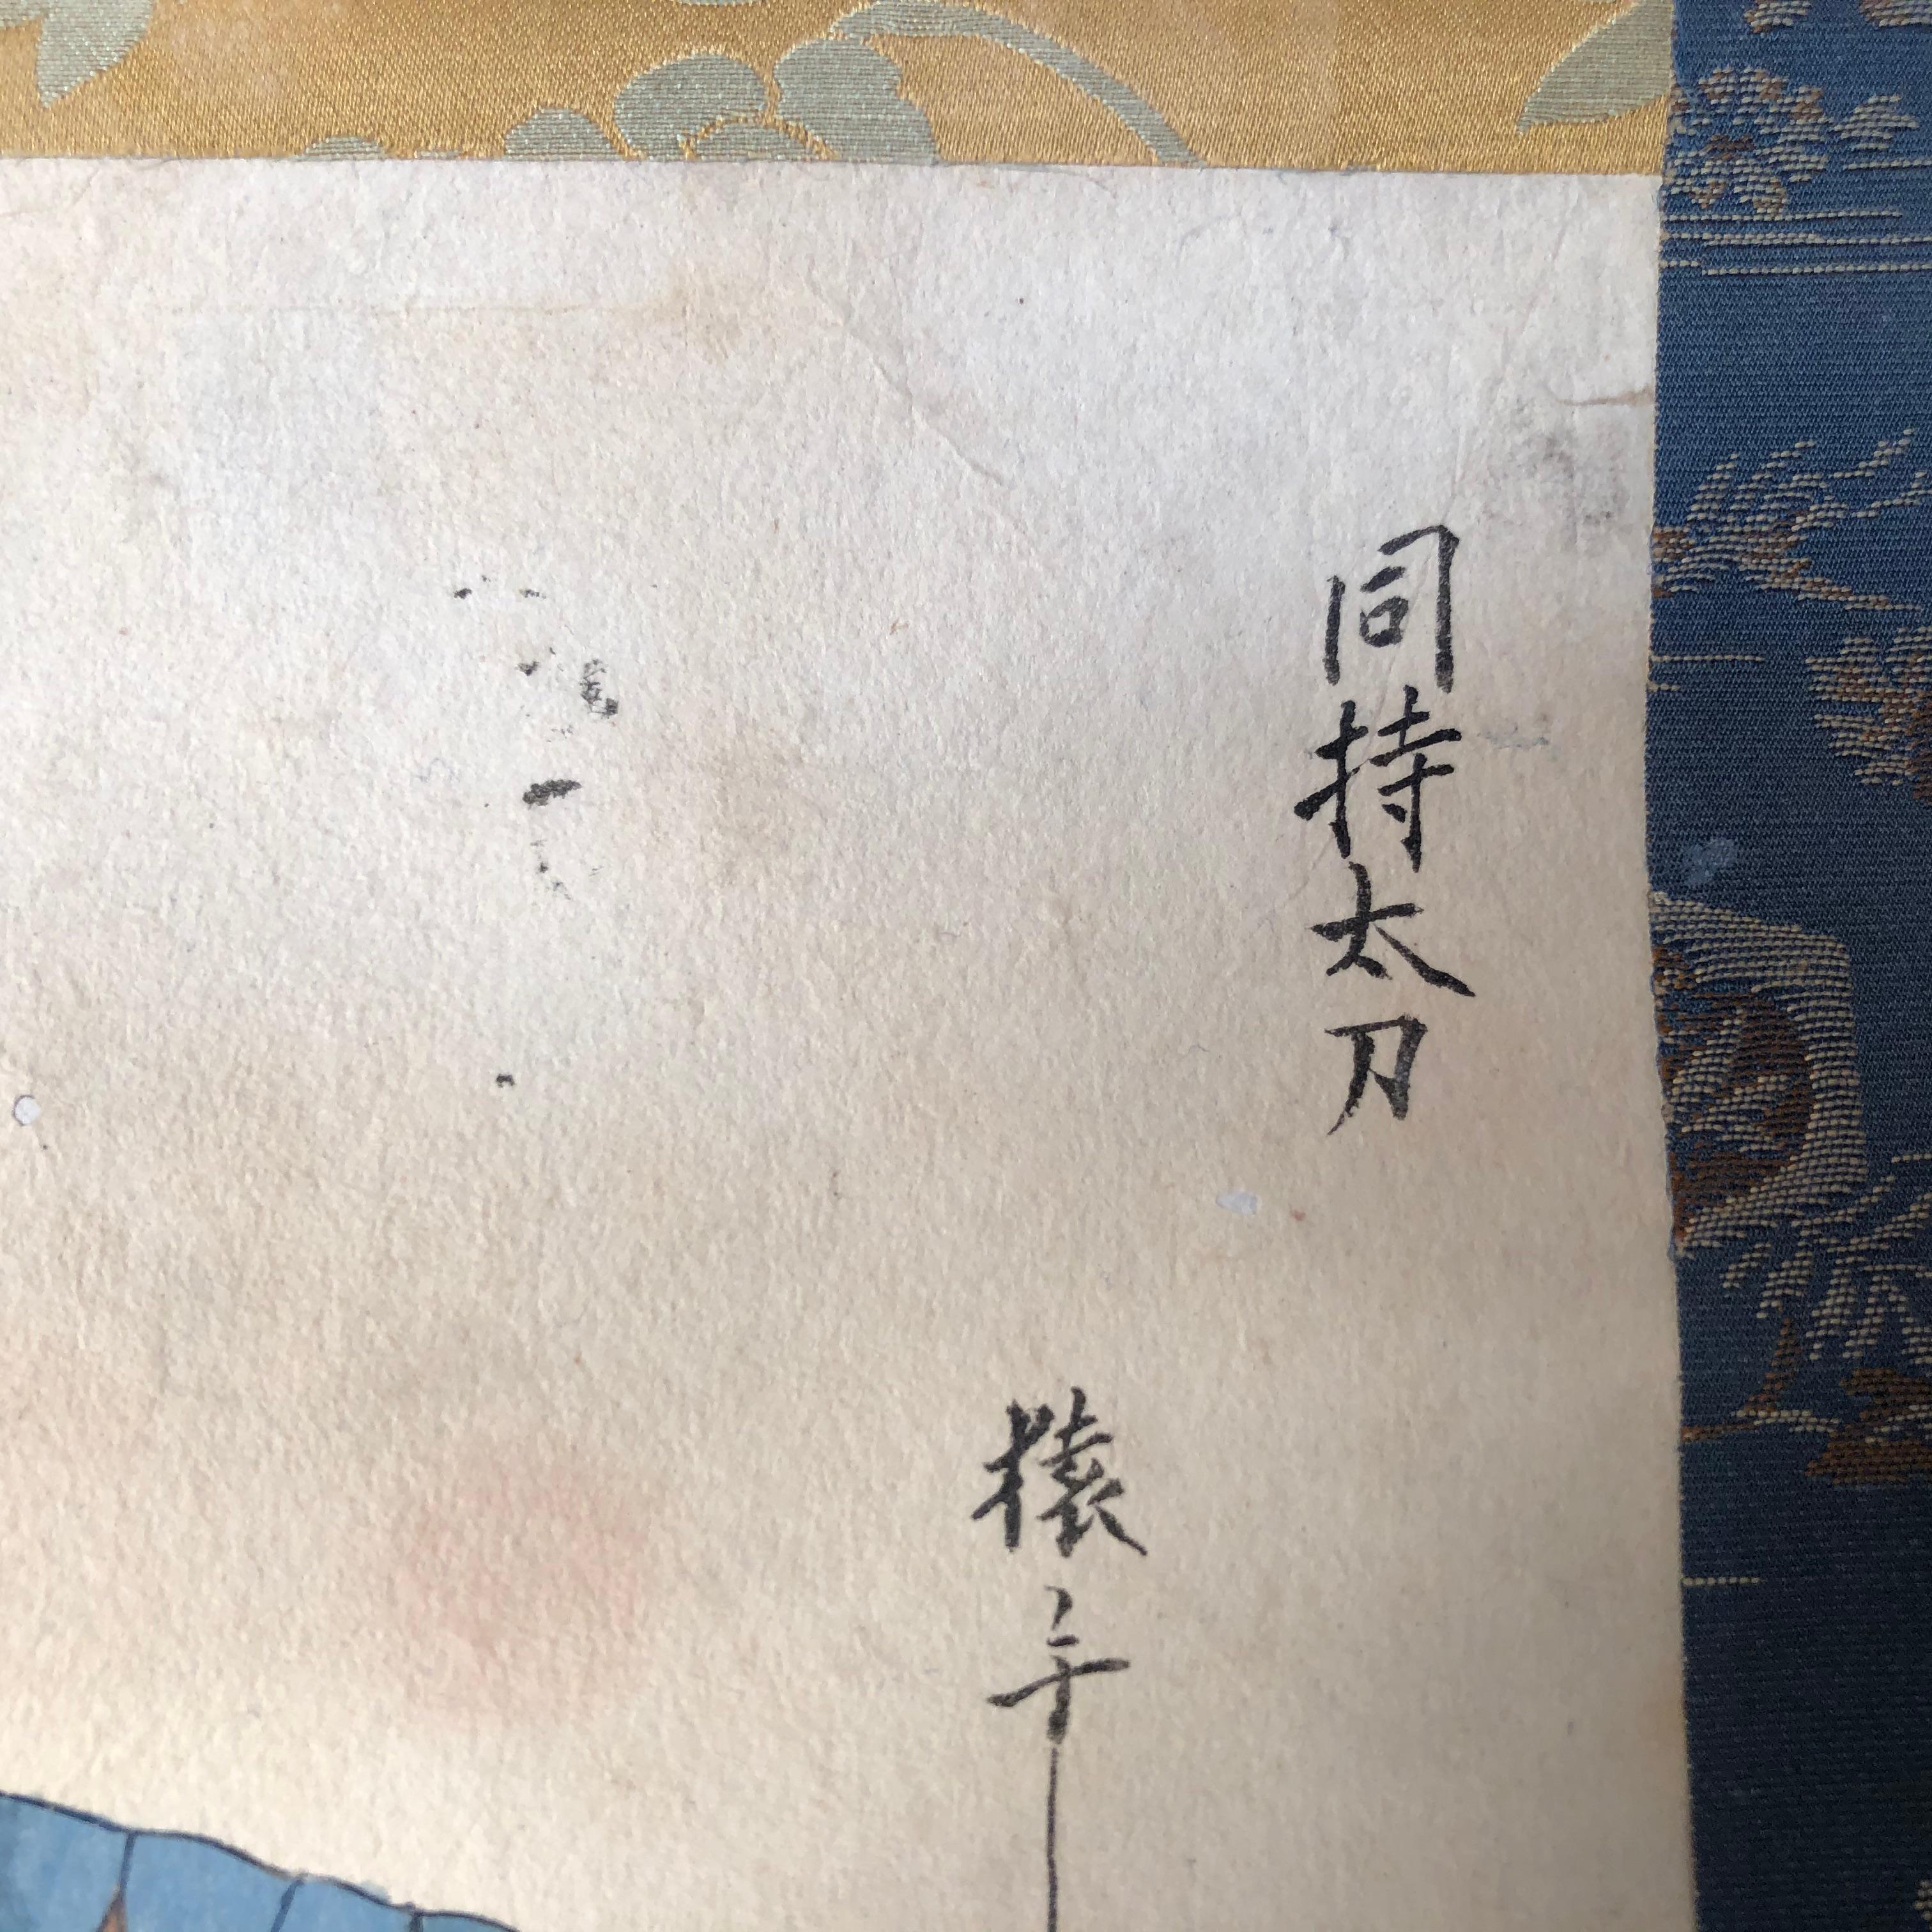 Japan Antique Samurai Sword Hand Painted Scroll Brilliant Blue Colors 9